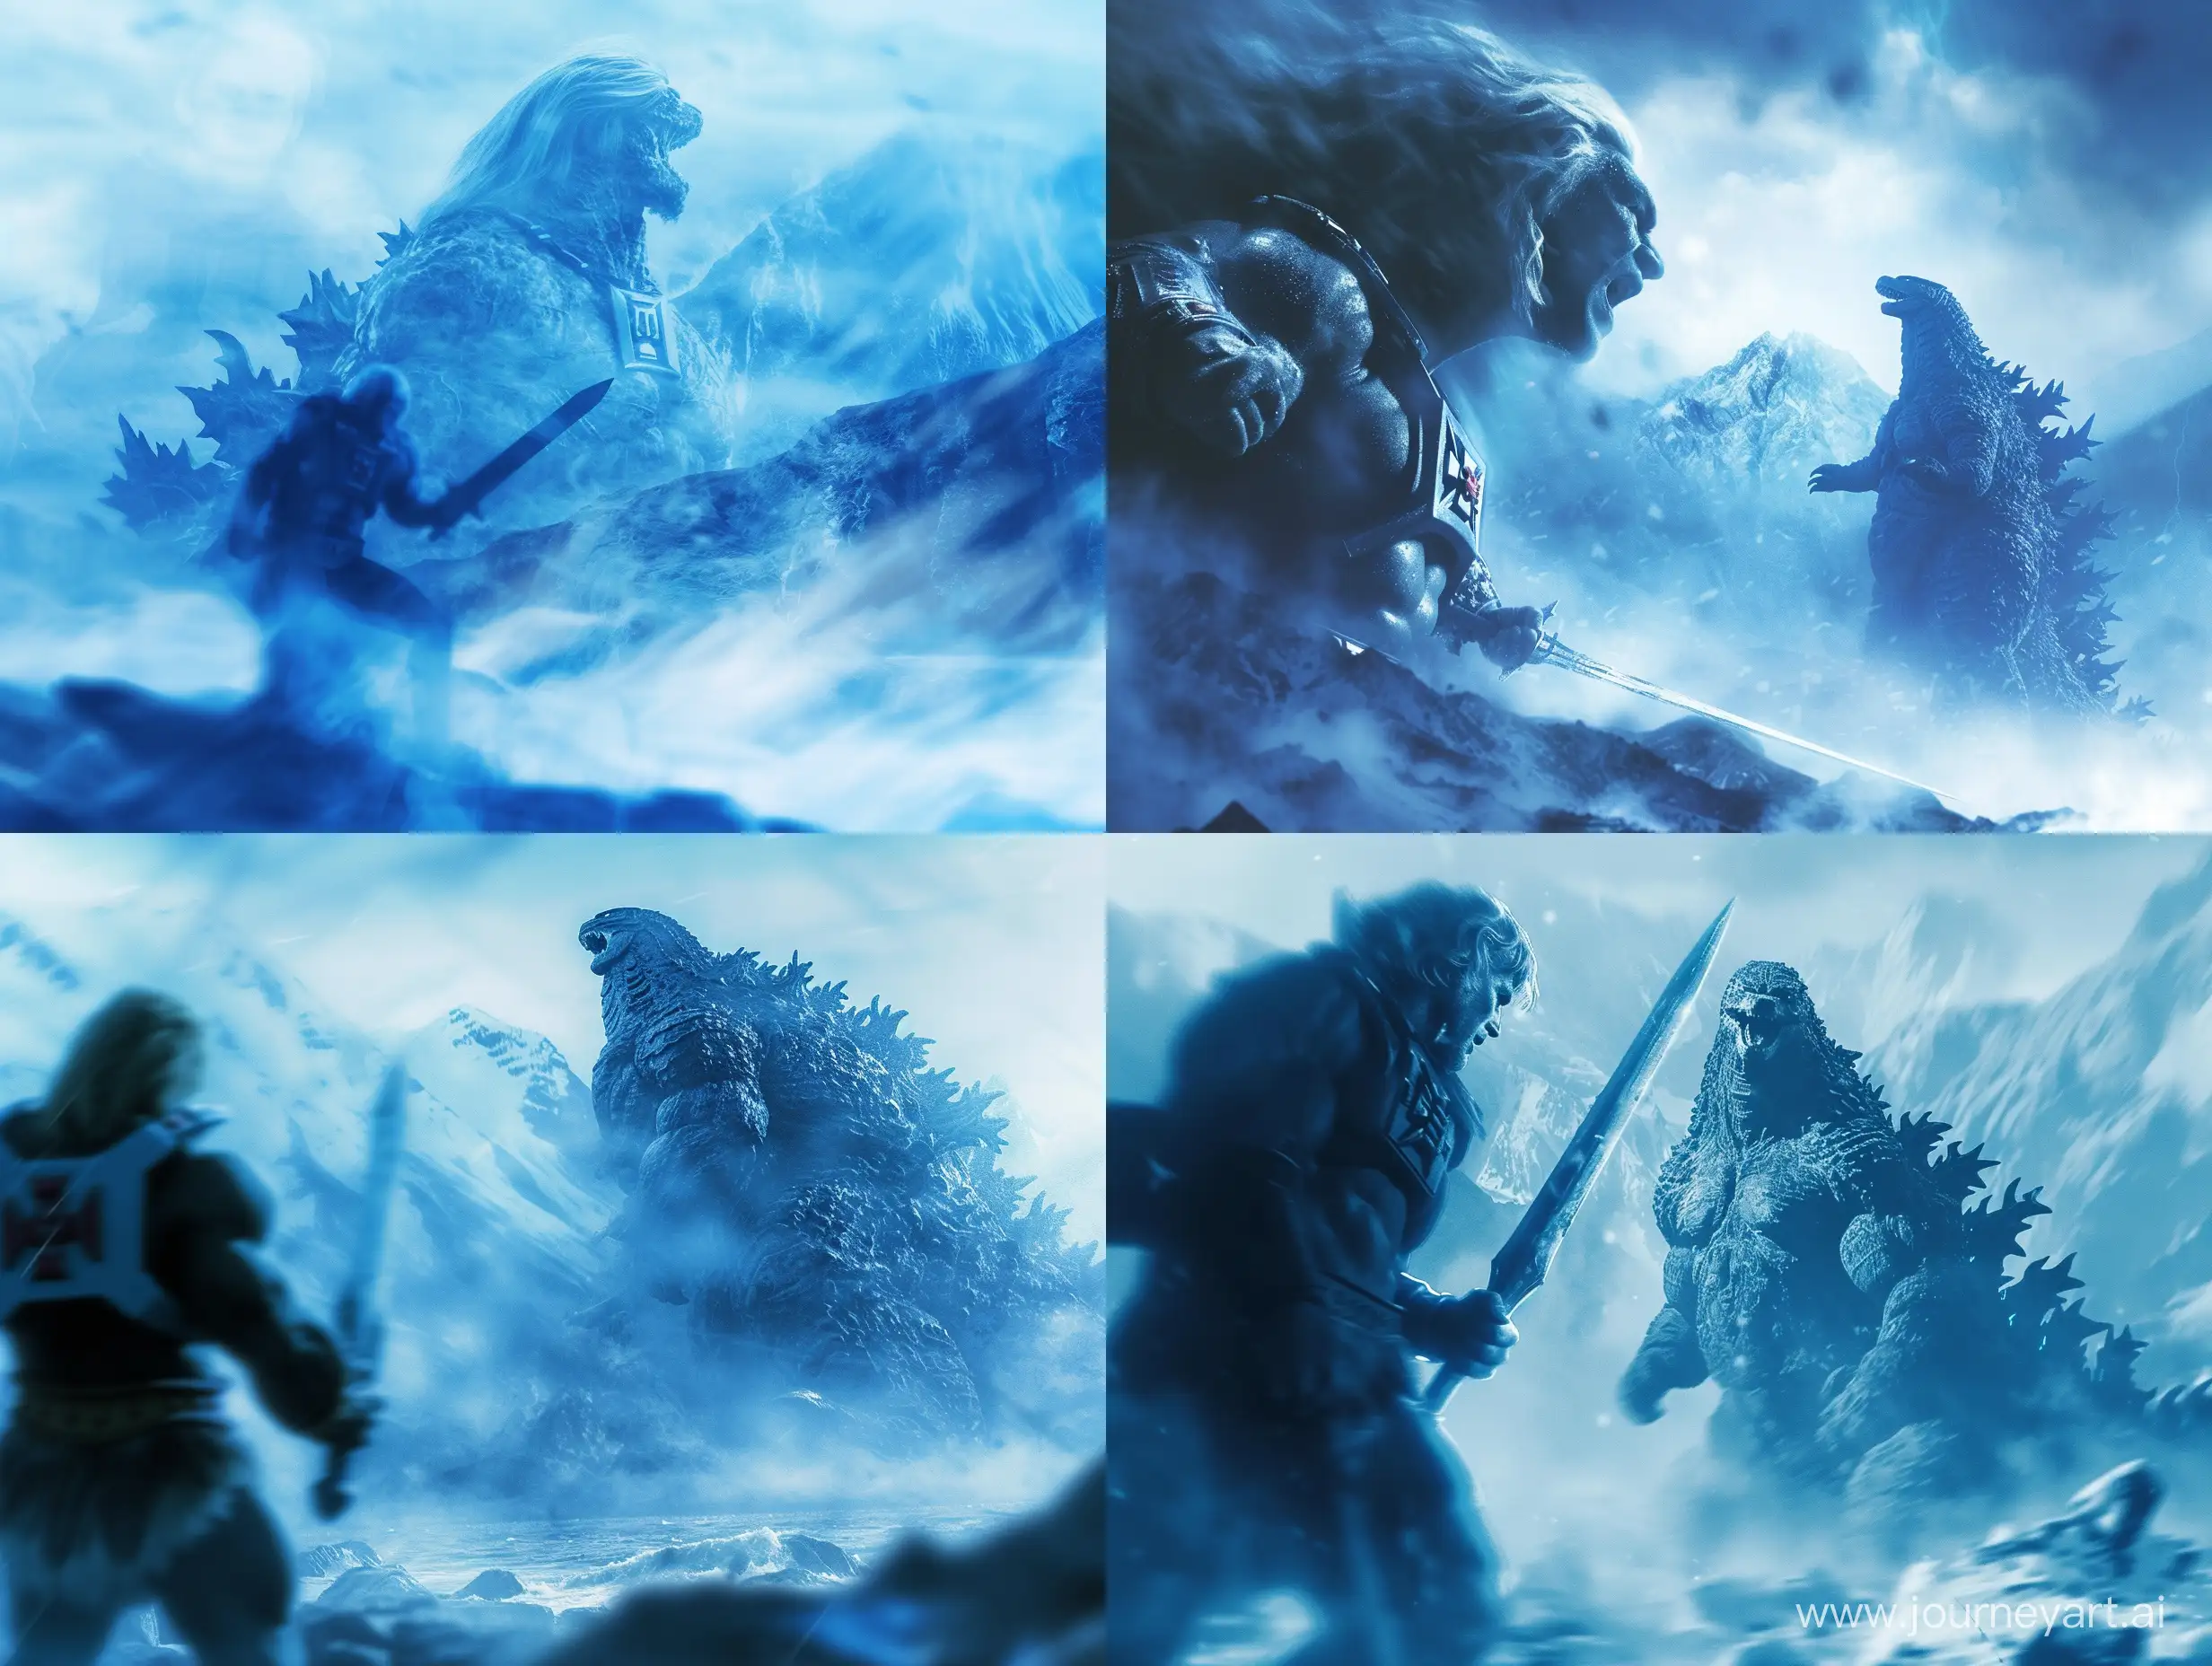 Mighty-HeMan-Faces-Giant-Godzilla-in-Epic-Mountain-Showdown